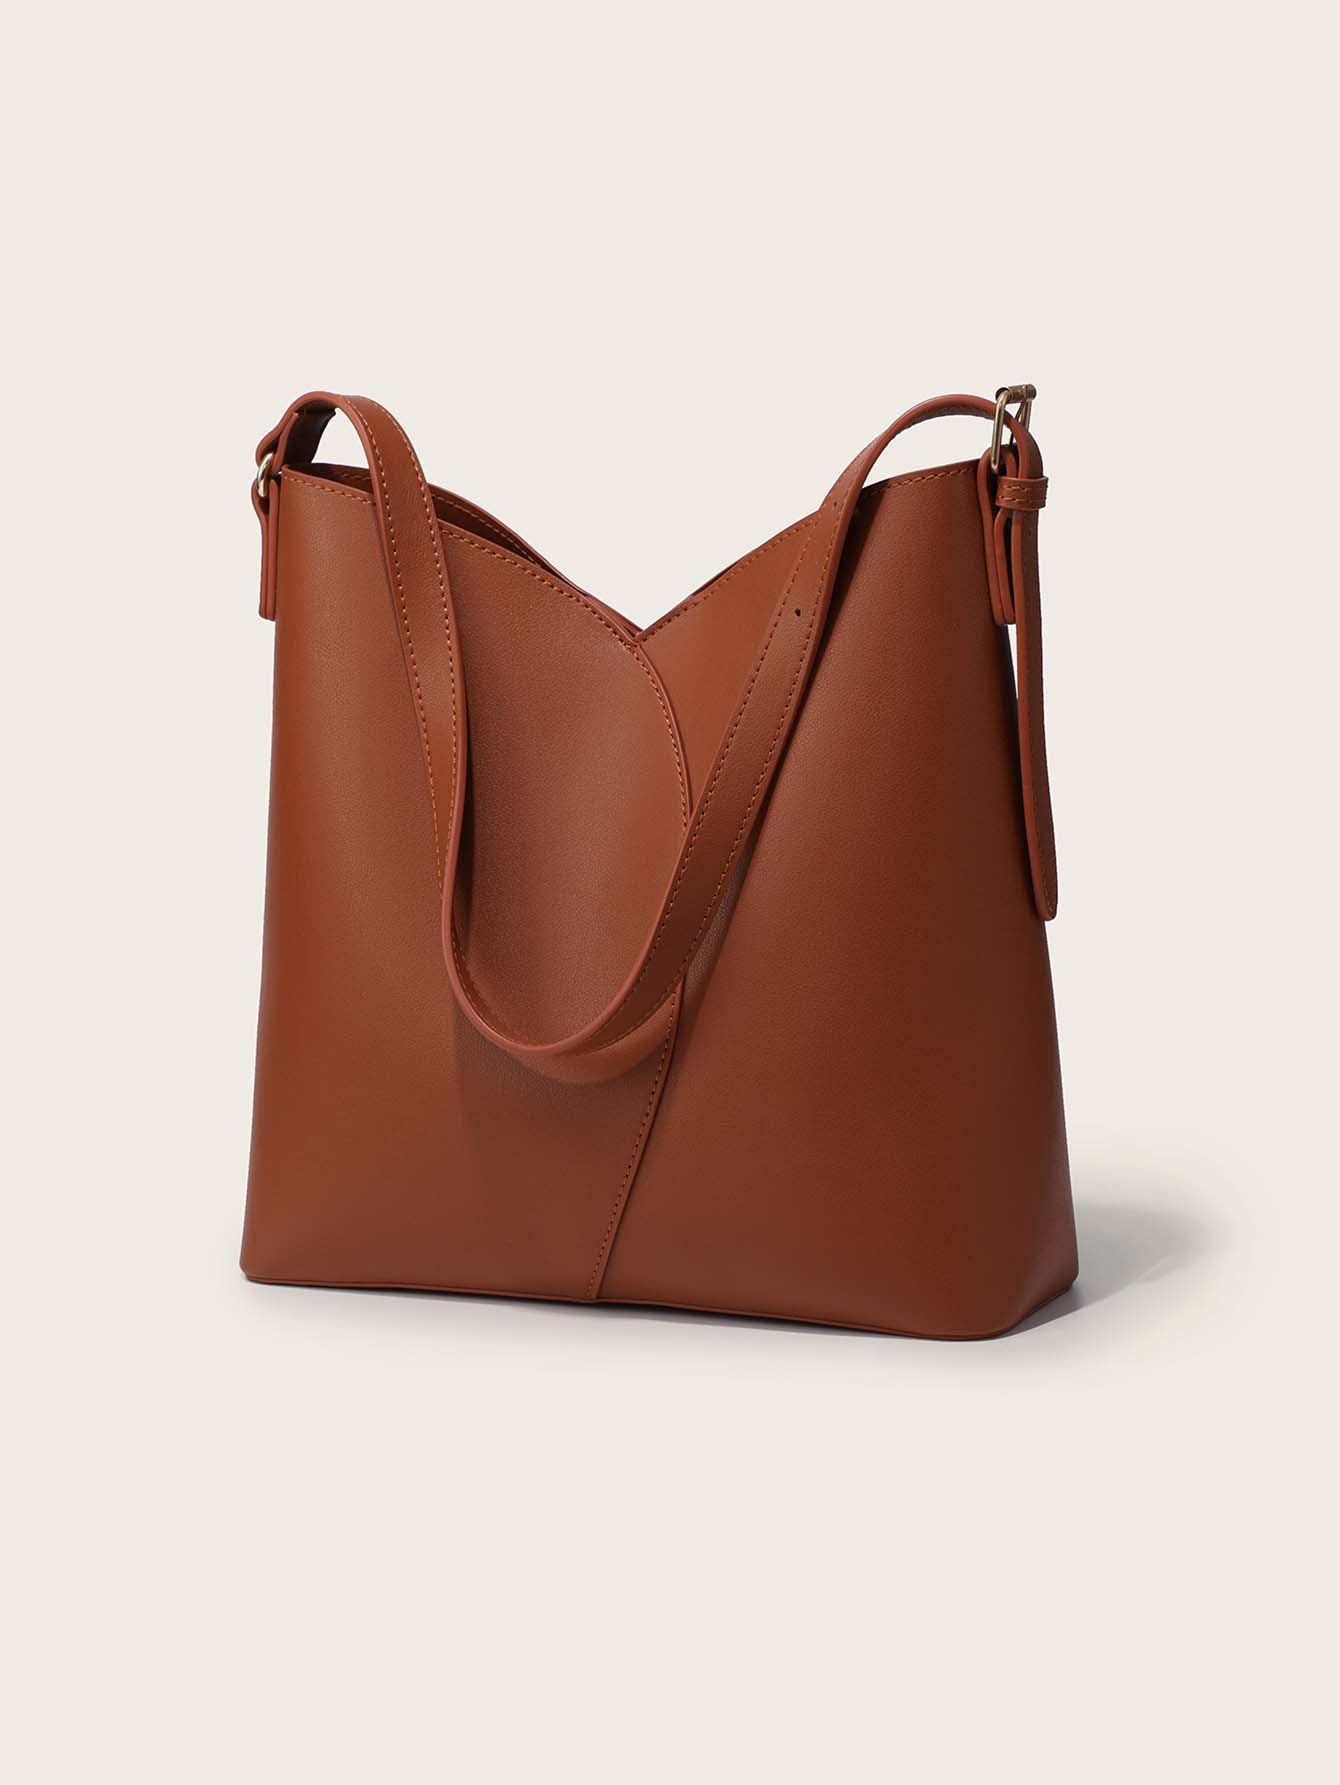 2Pcs/Set women Handbags Purse Women Shoulder Bags Casual Tote Bag Sai Feel